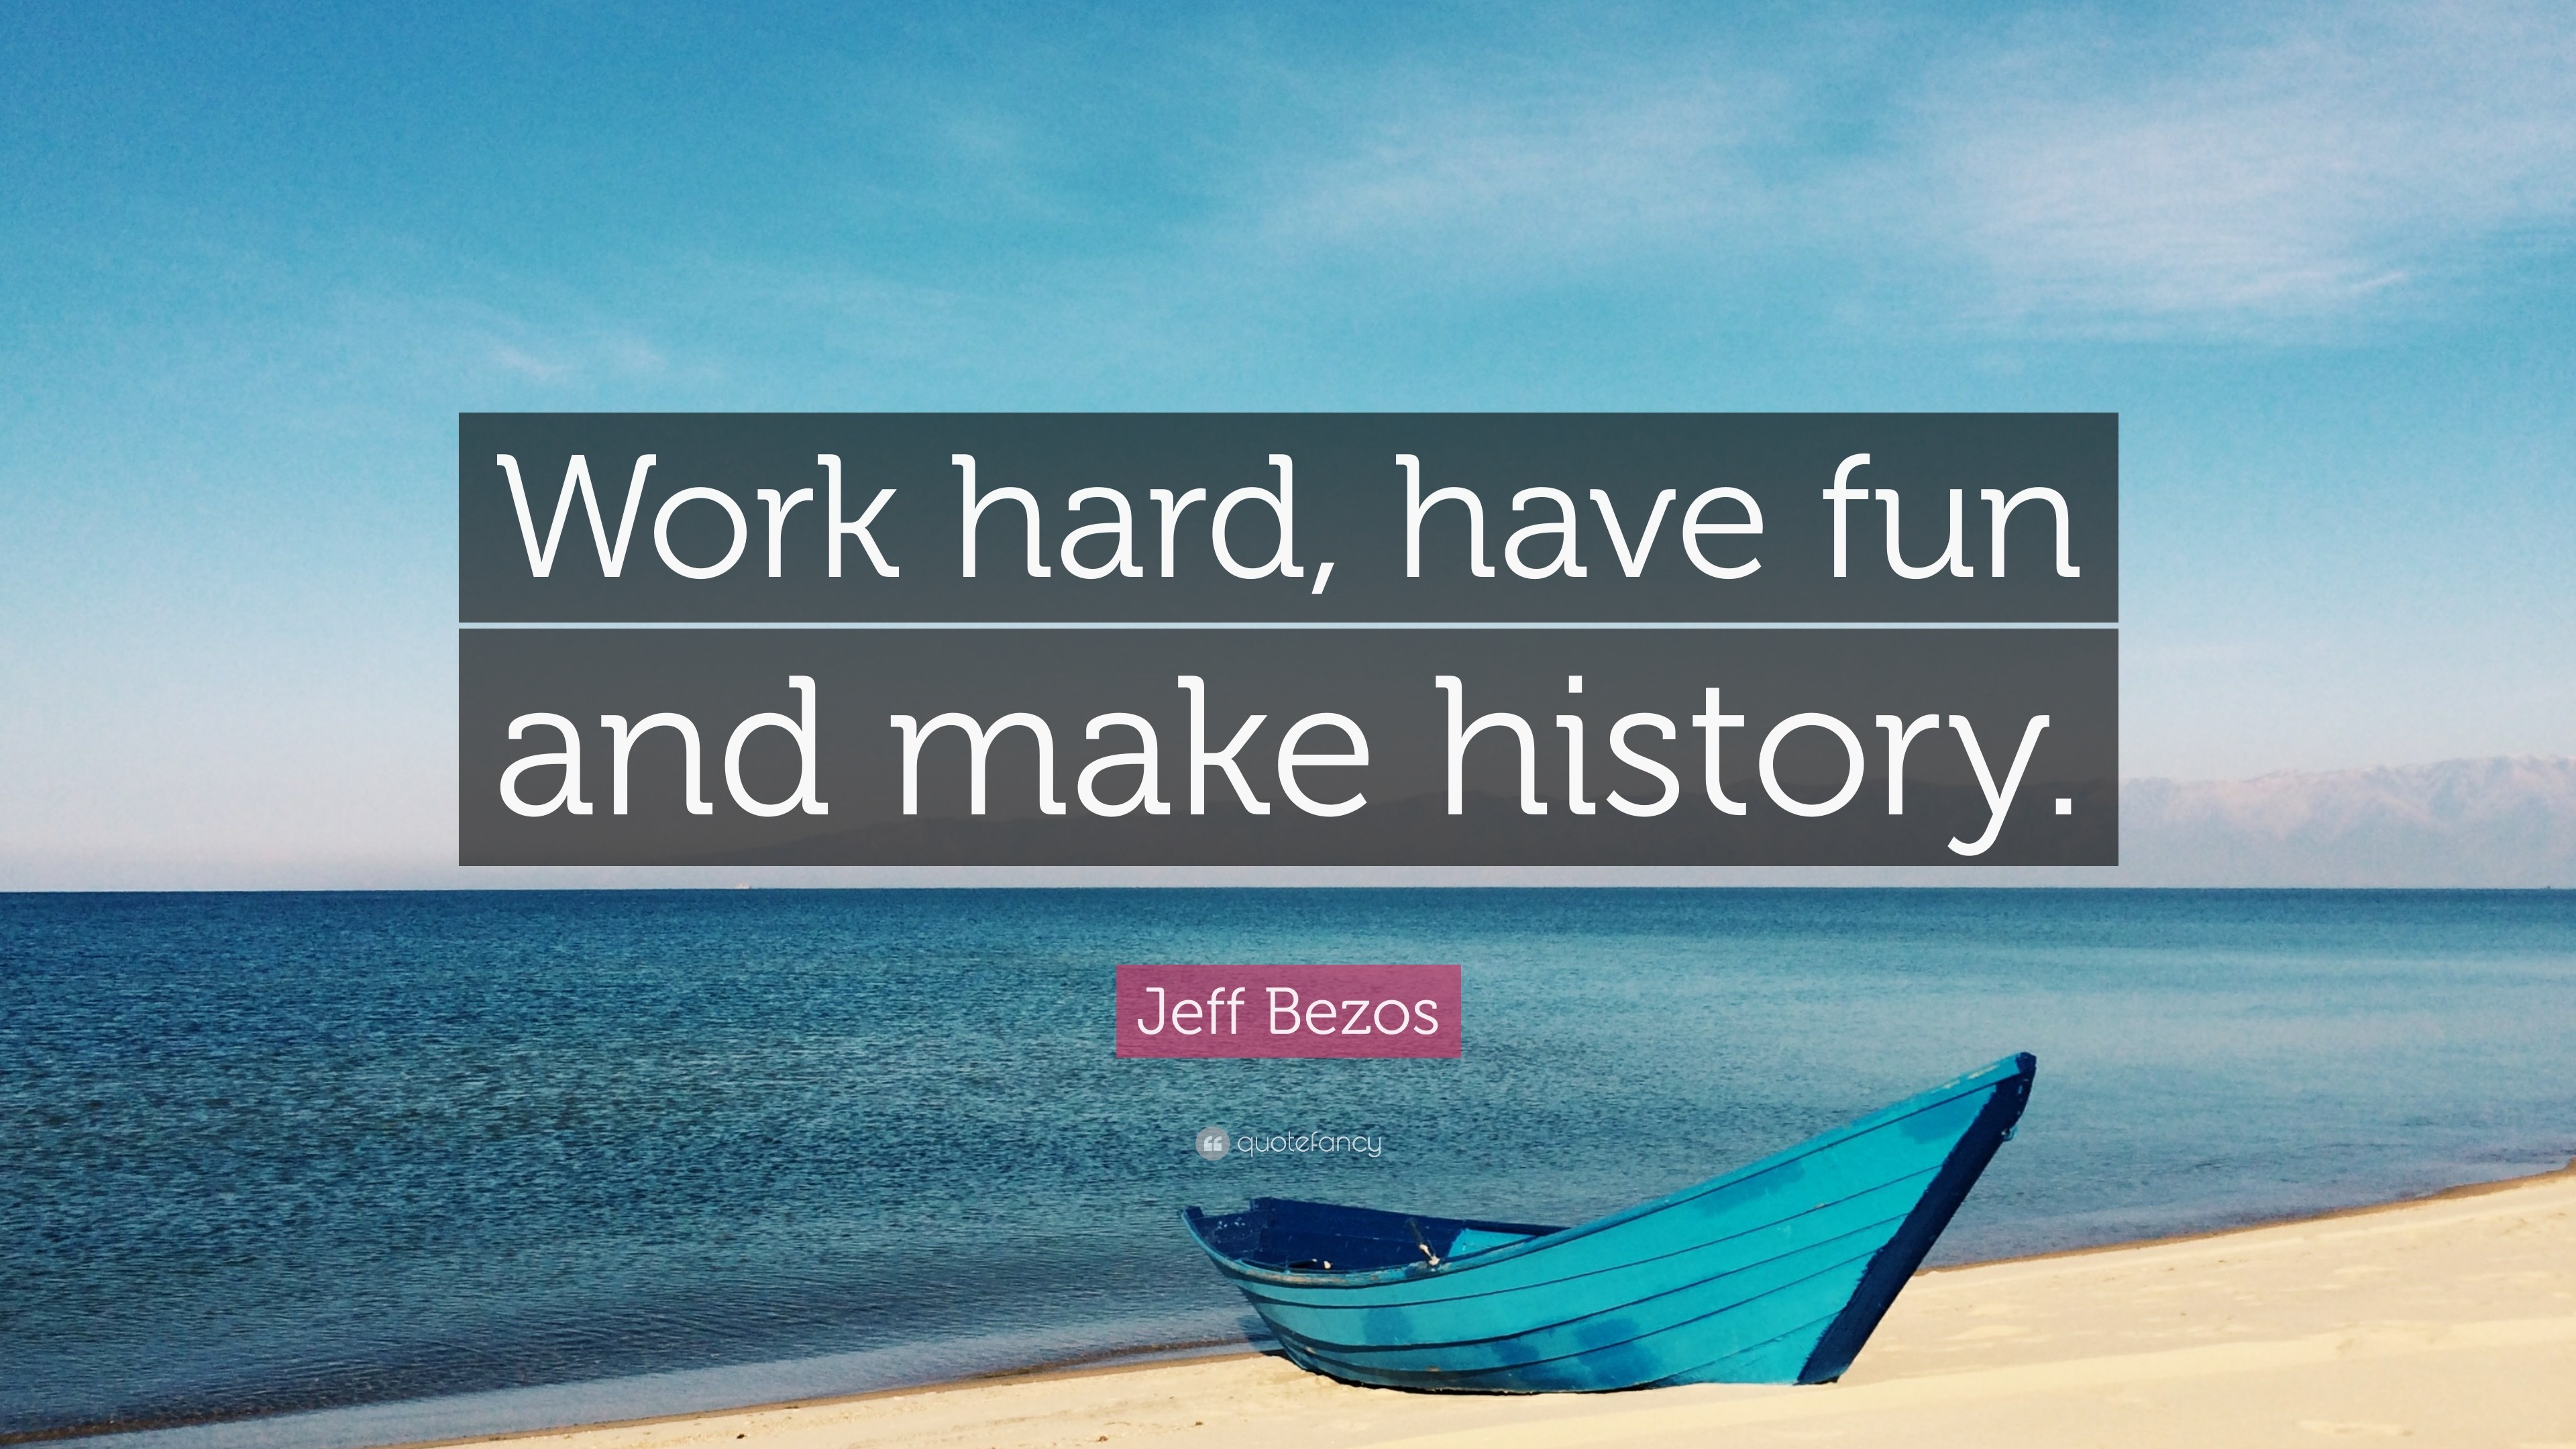 3840x2160 Jeff Bezos Quote: “Work hard, have fun and make history.”